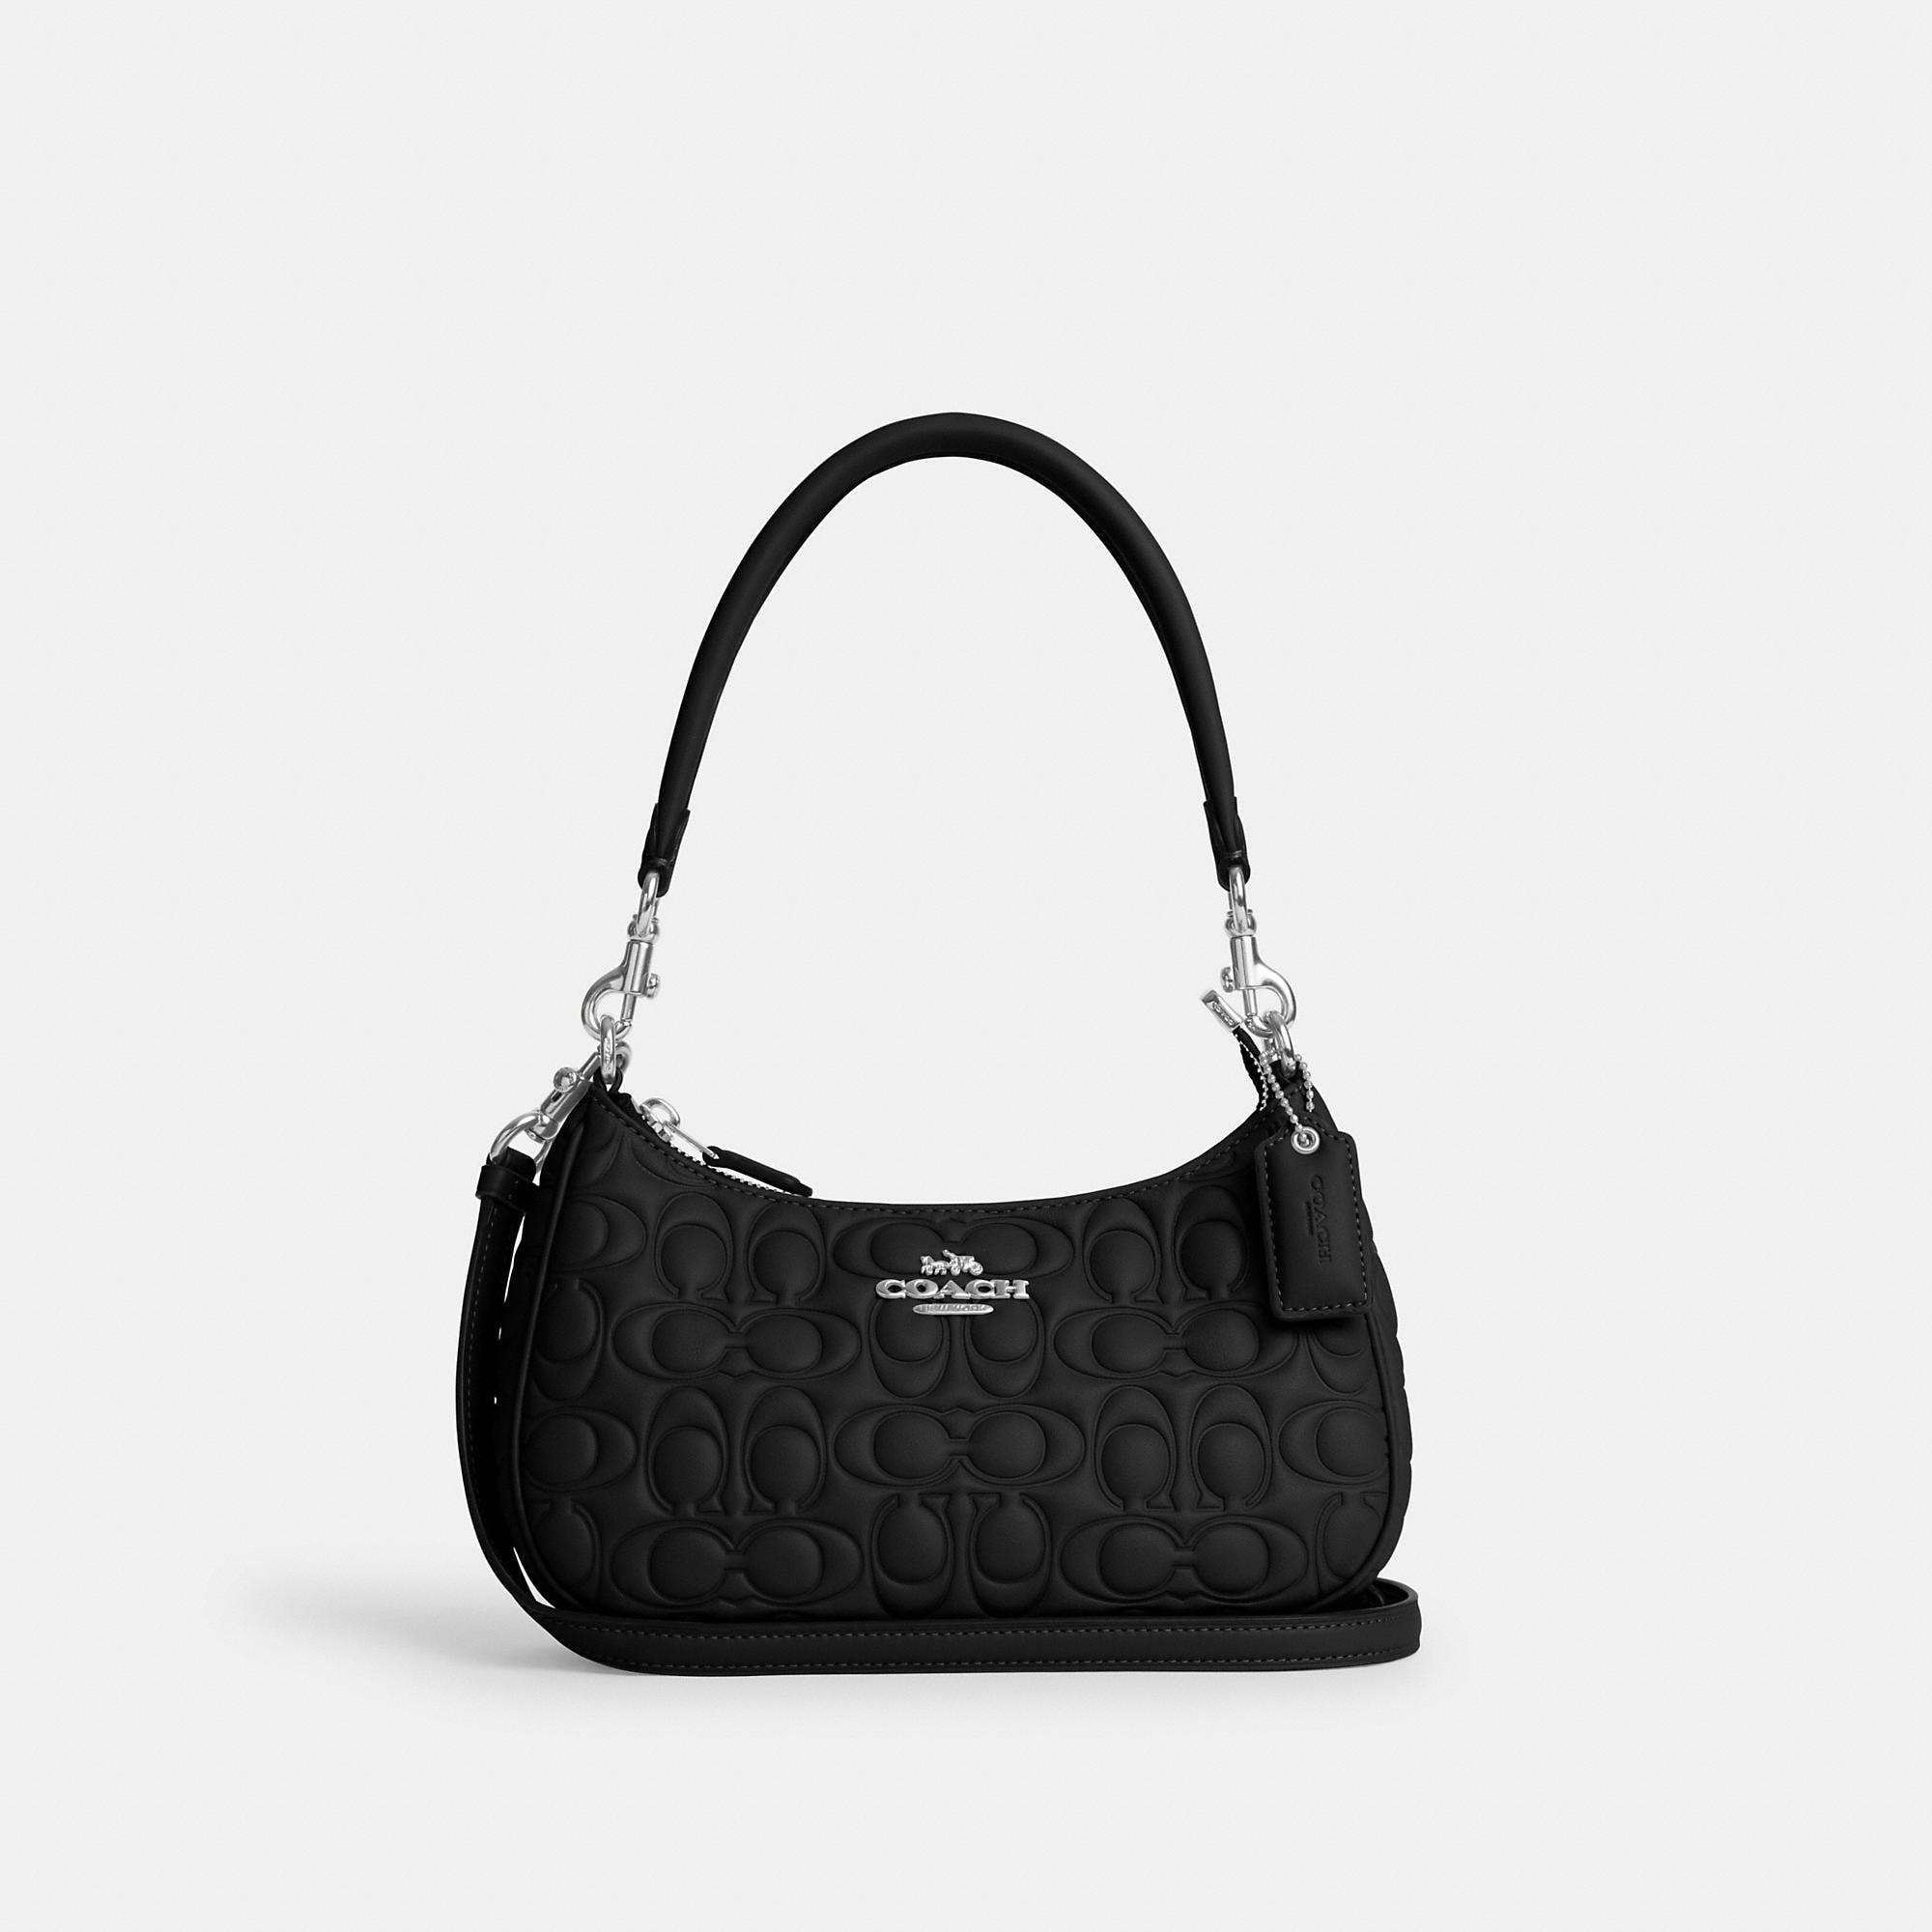 Small Coach shoulder bag. Black and grey. great condition. | Shoulder bag, Coach  shoulder bag, Canvas leather bag